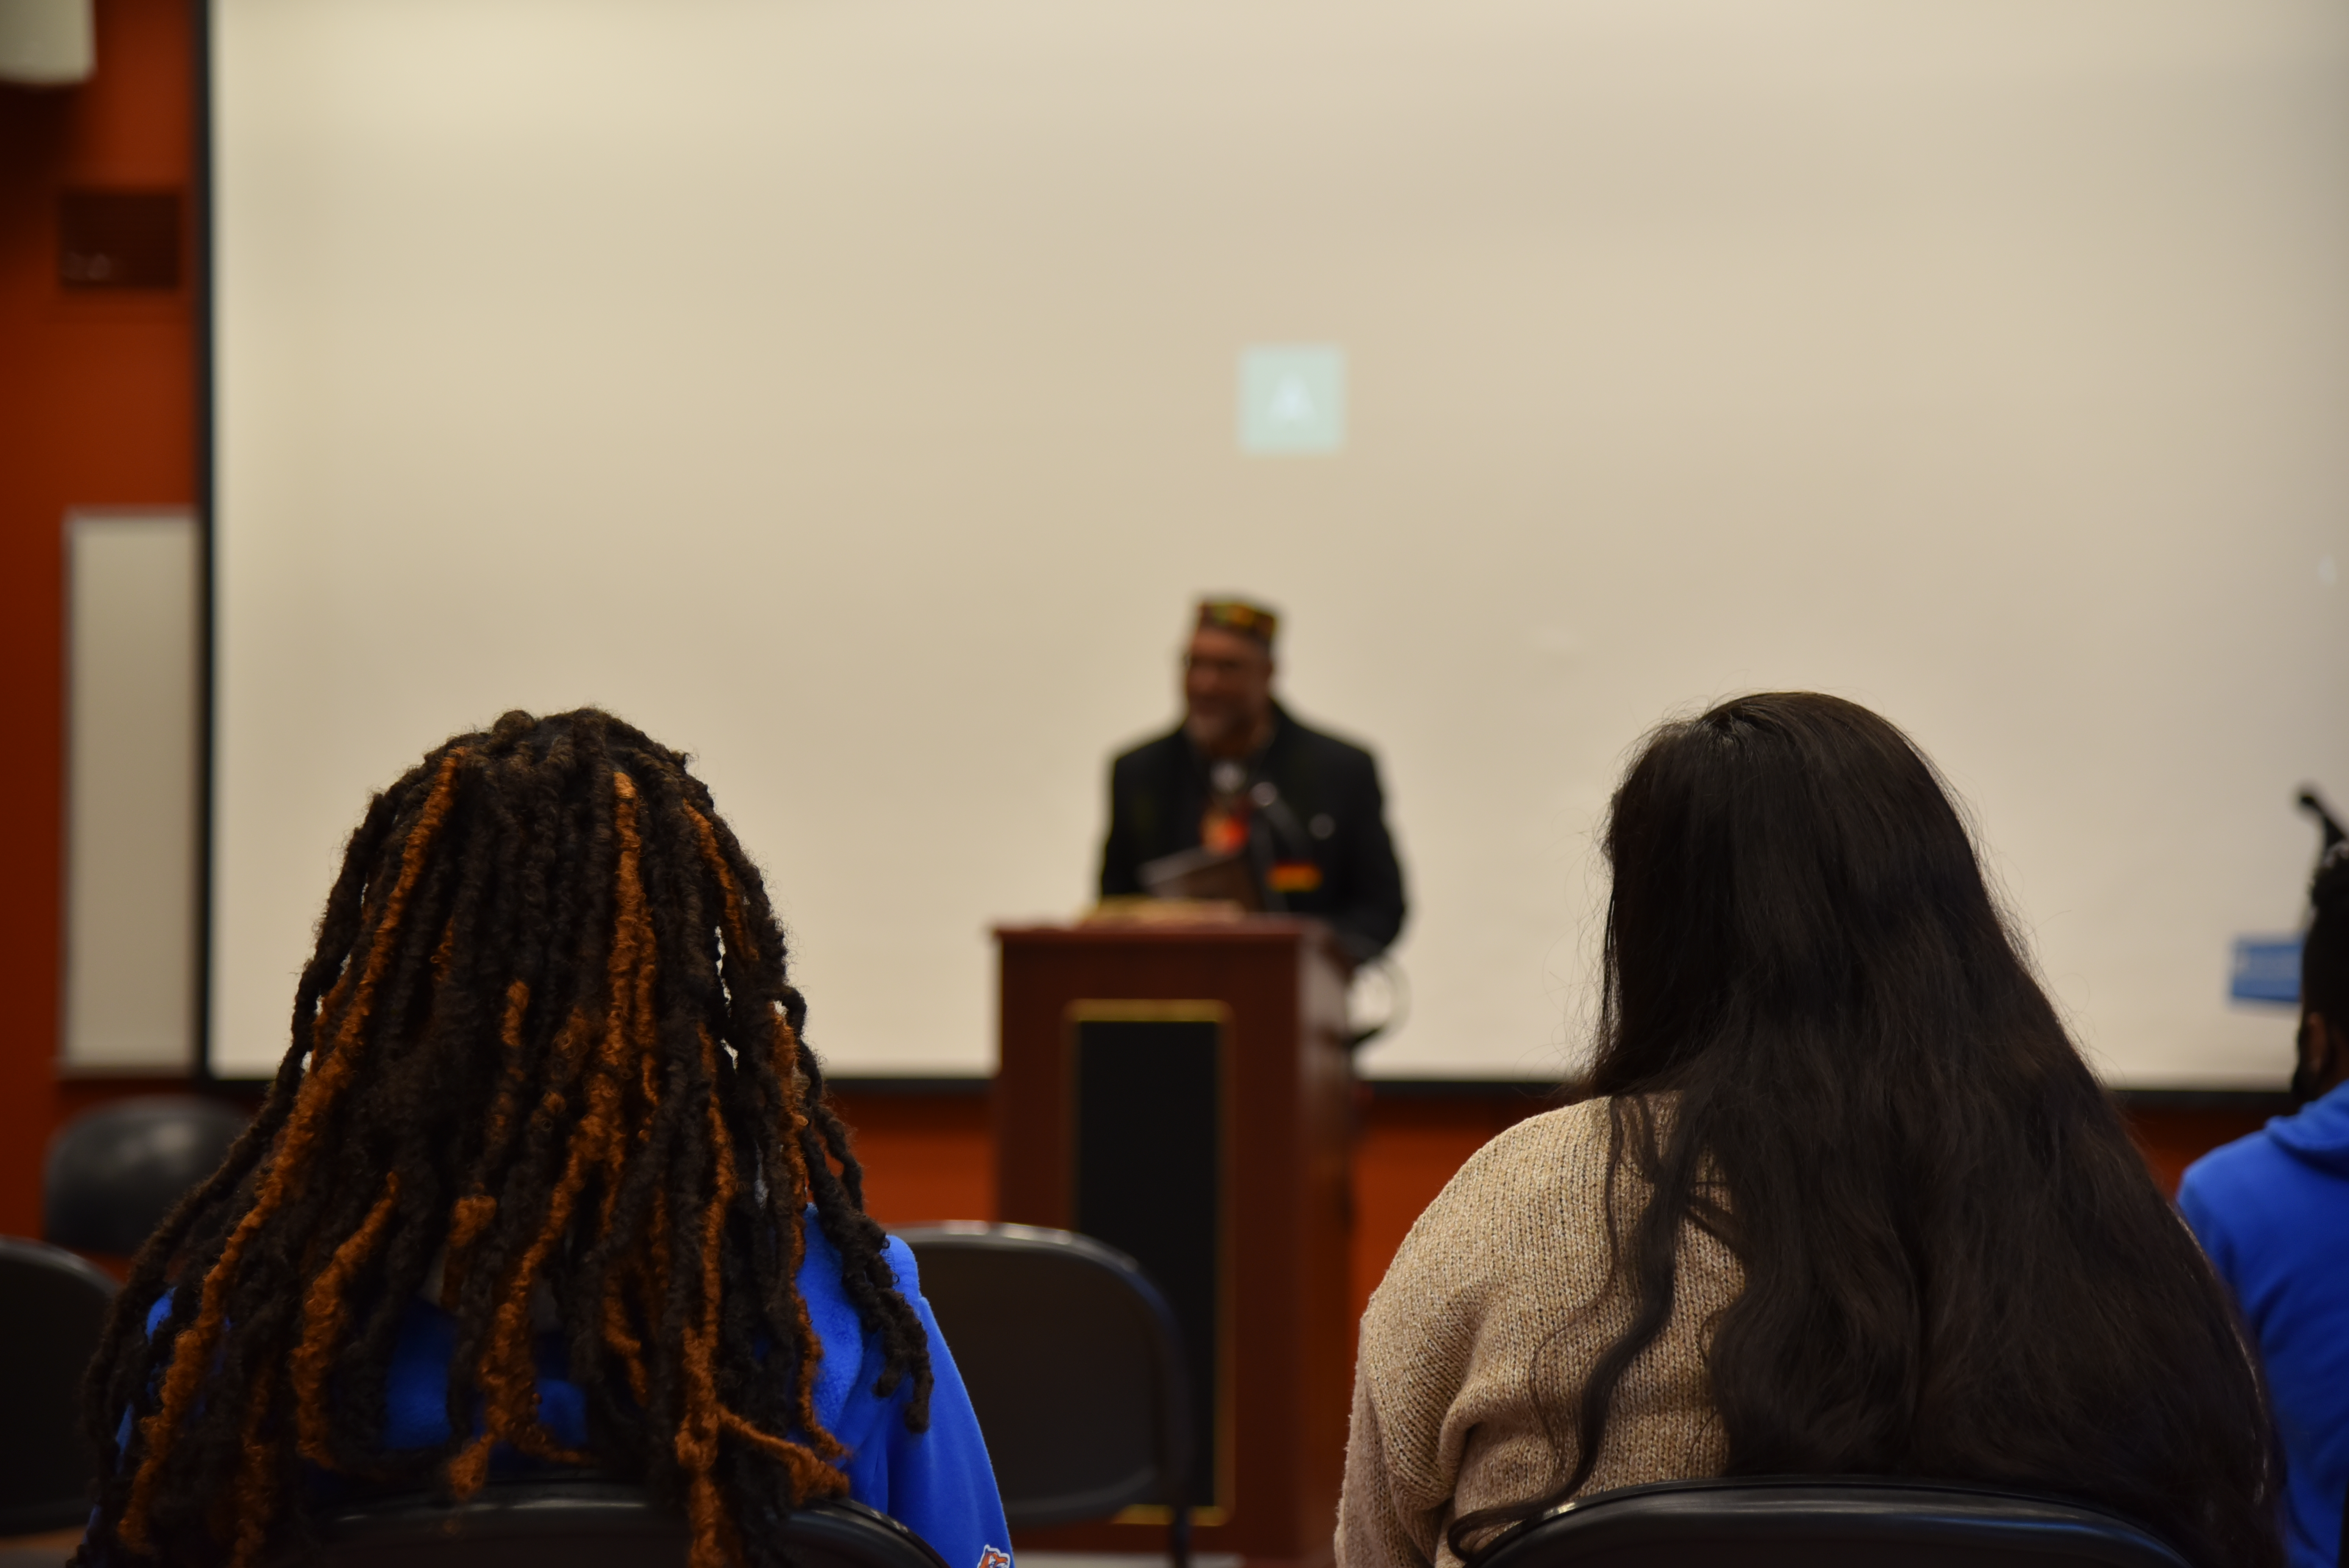 professor Carl Livingstone speaks at a student event